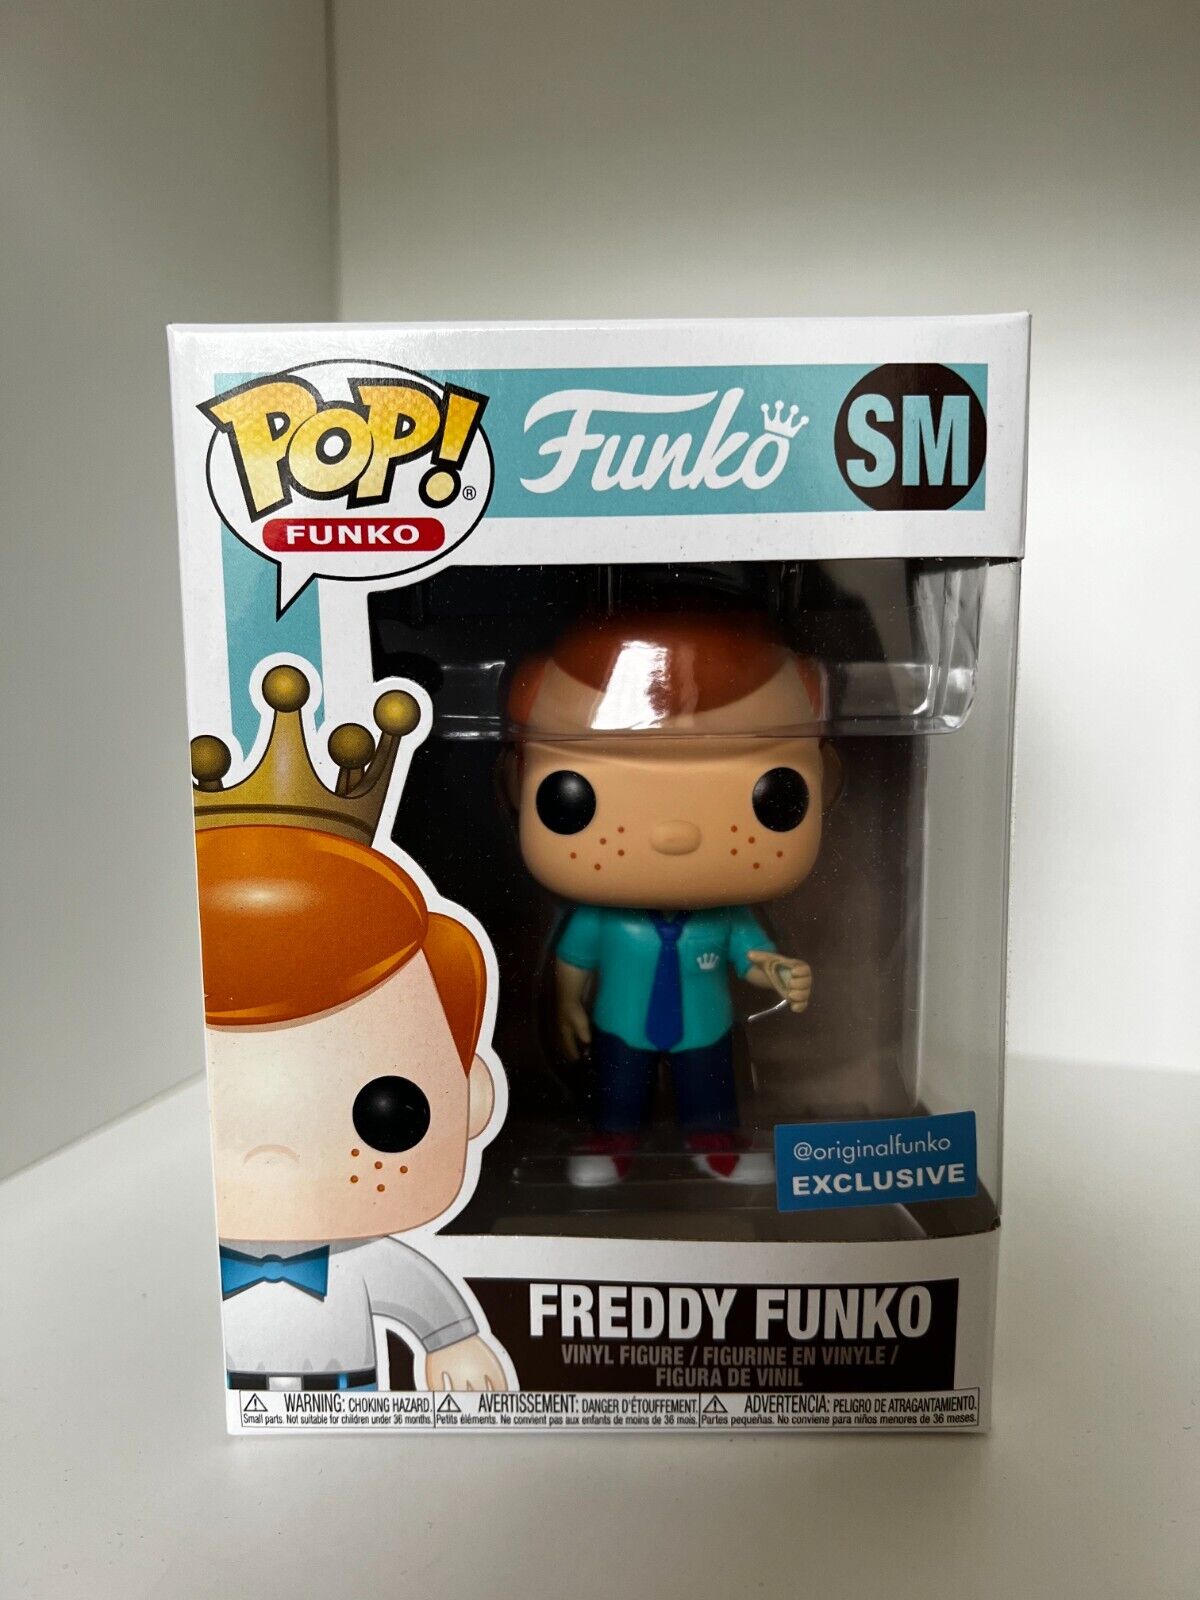 Funko Pop Vinyl: Freddy Funko (Social Media) - Original Funko Exclusive Vaulted